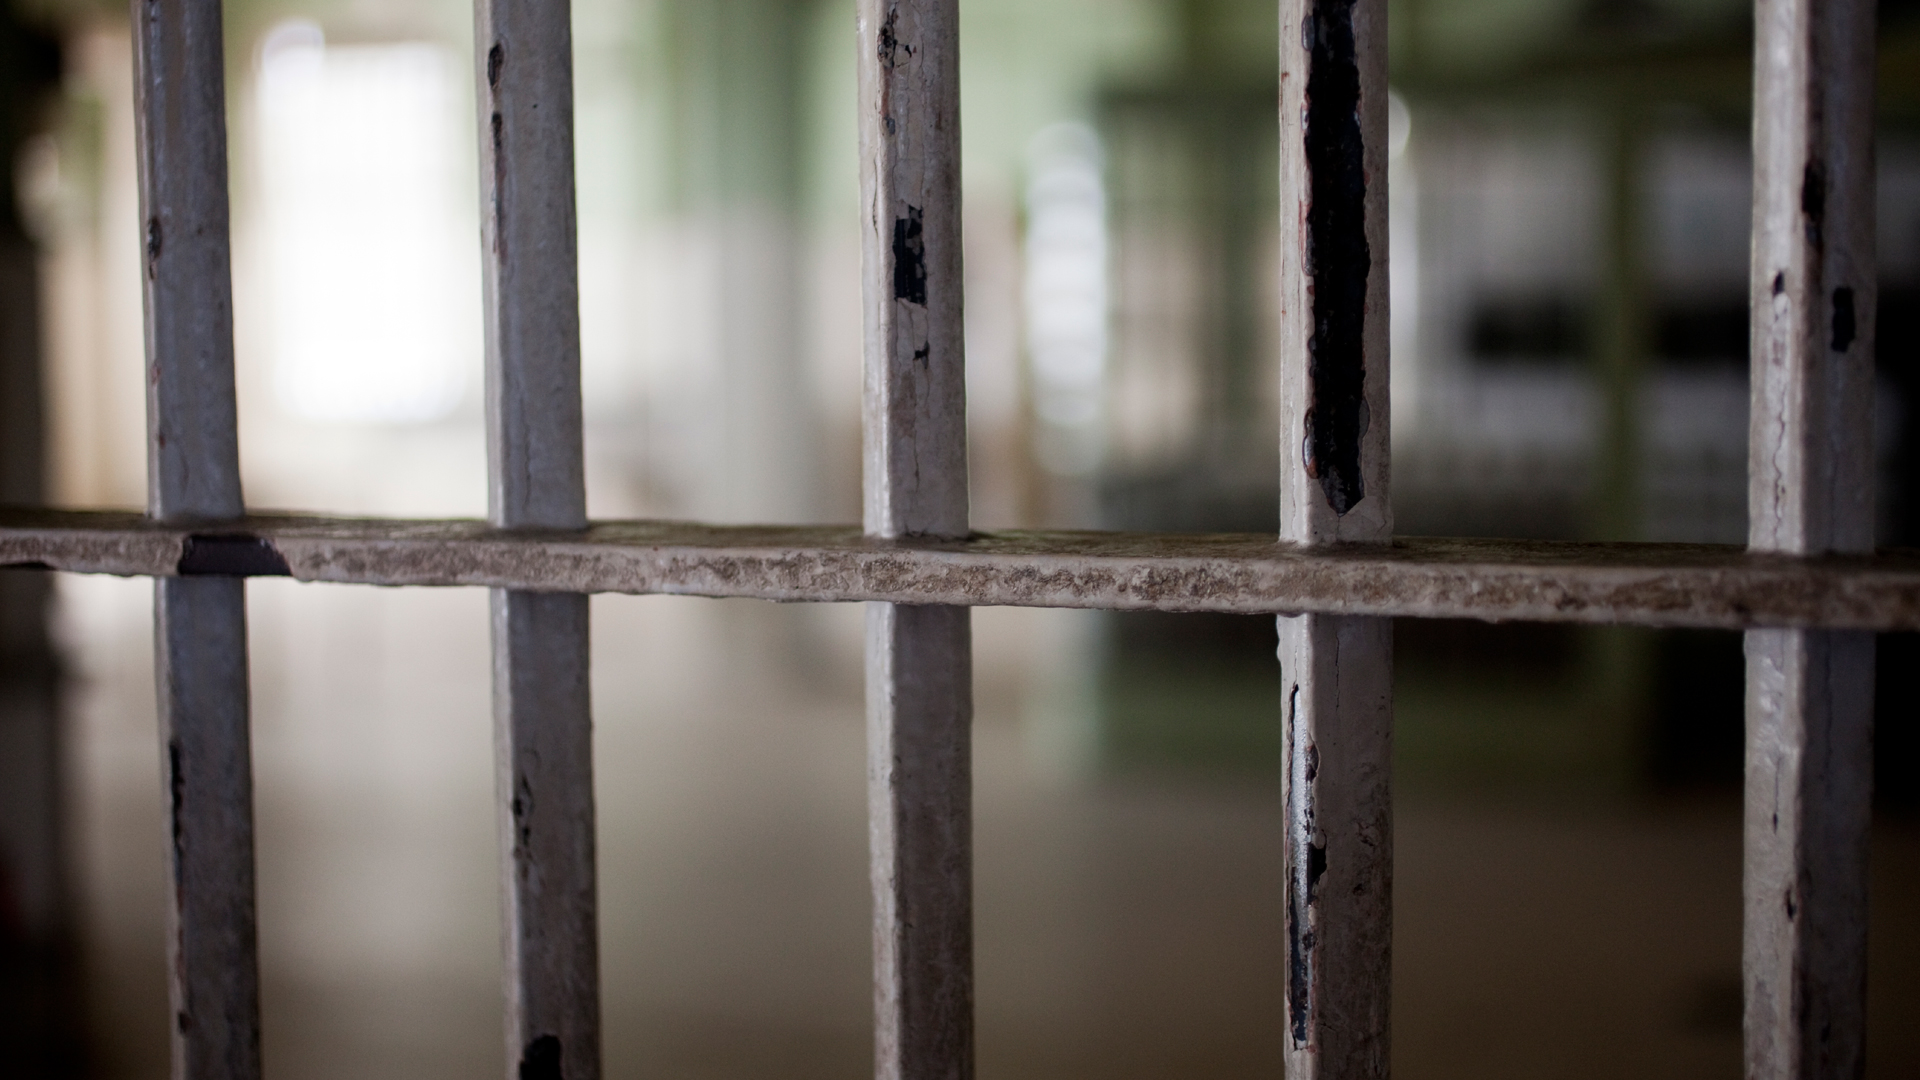 Twice sentenced for double murder, Nebraska death row inmate dies